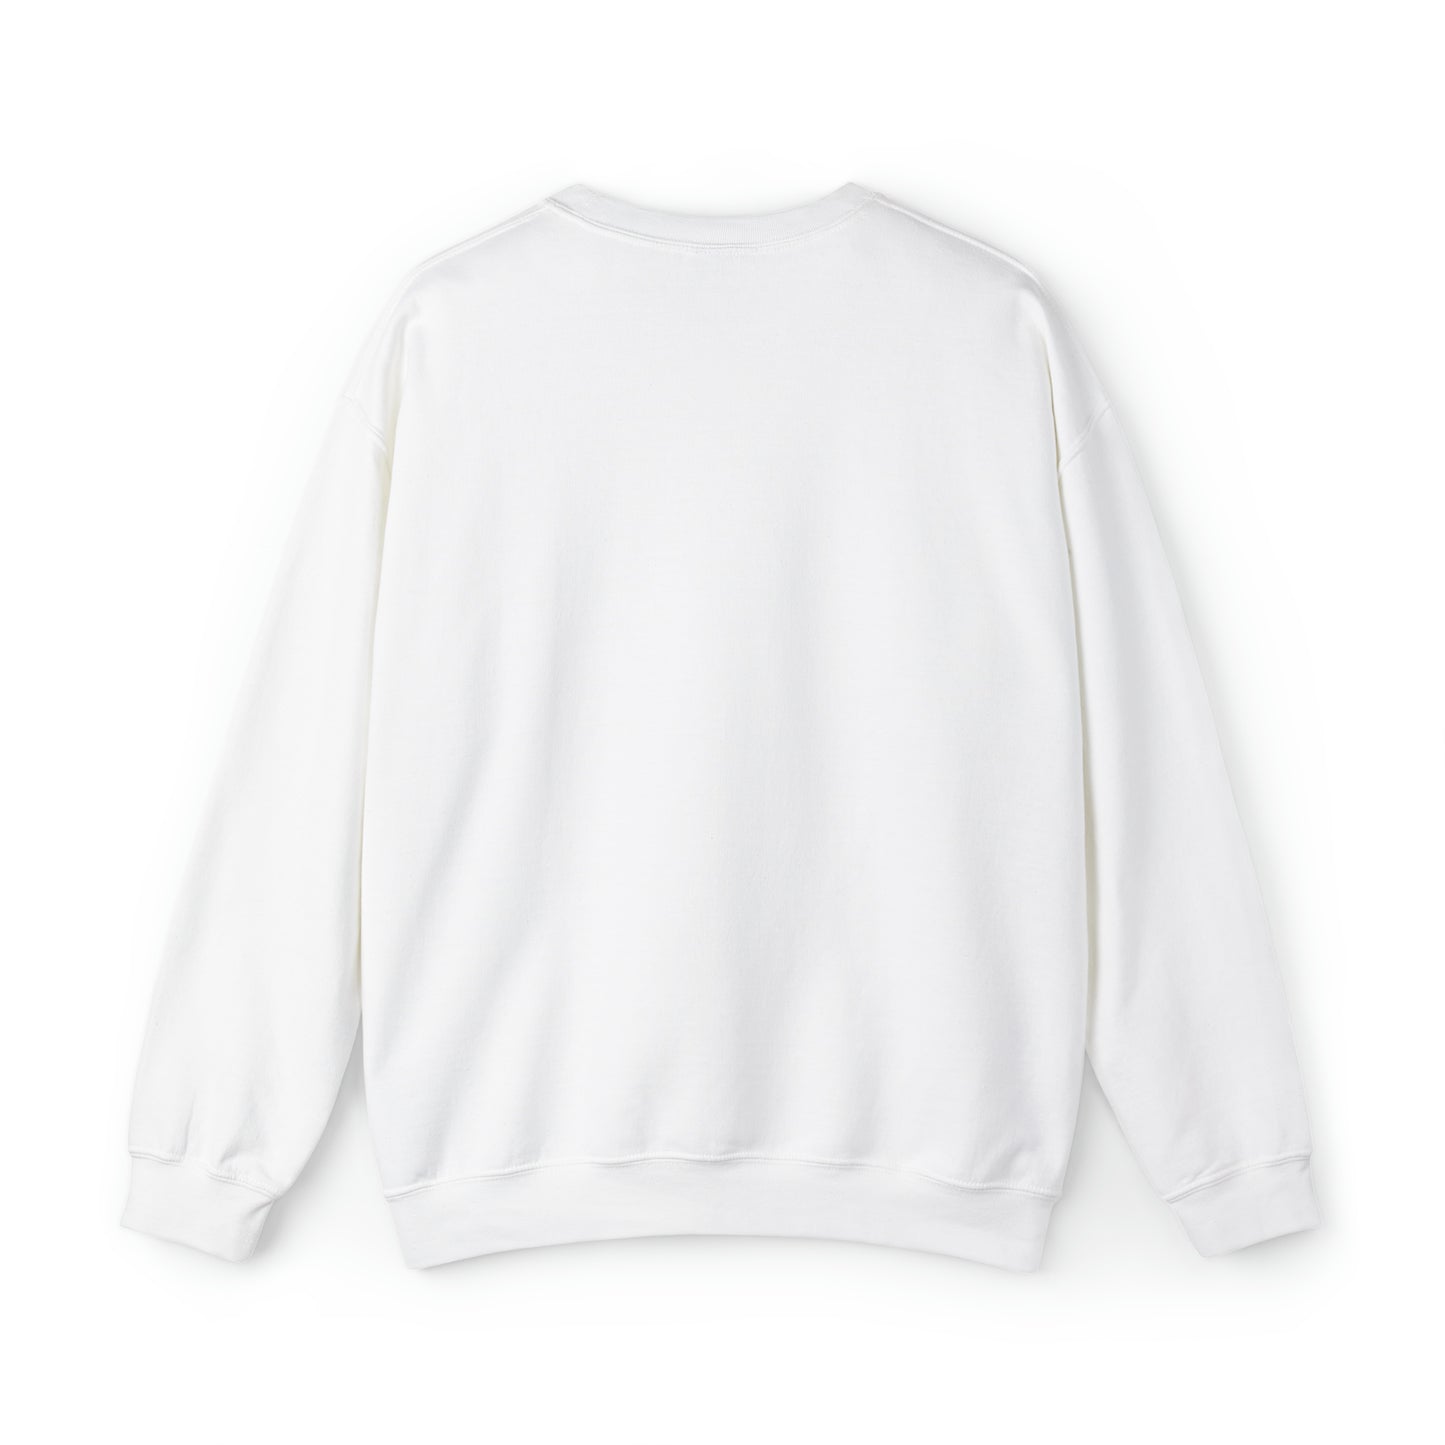 Cute Black Cat Halloween Sweatshirt Men's Women's Black Grey White Small Medium Large XL XXL XXL Halloween Sweatshirts